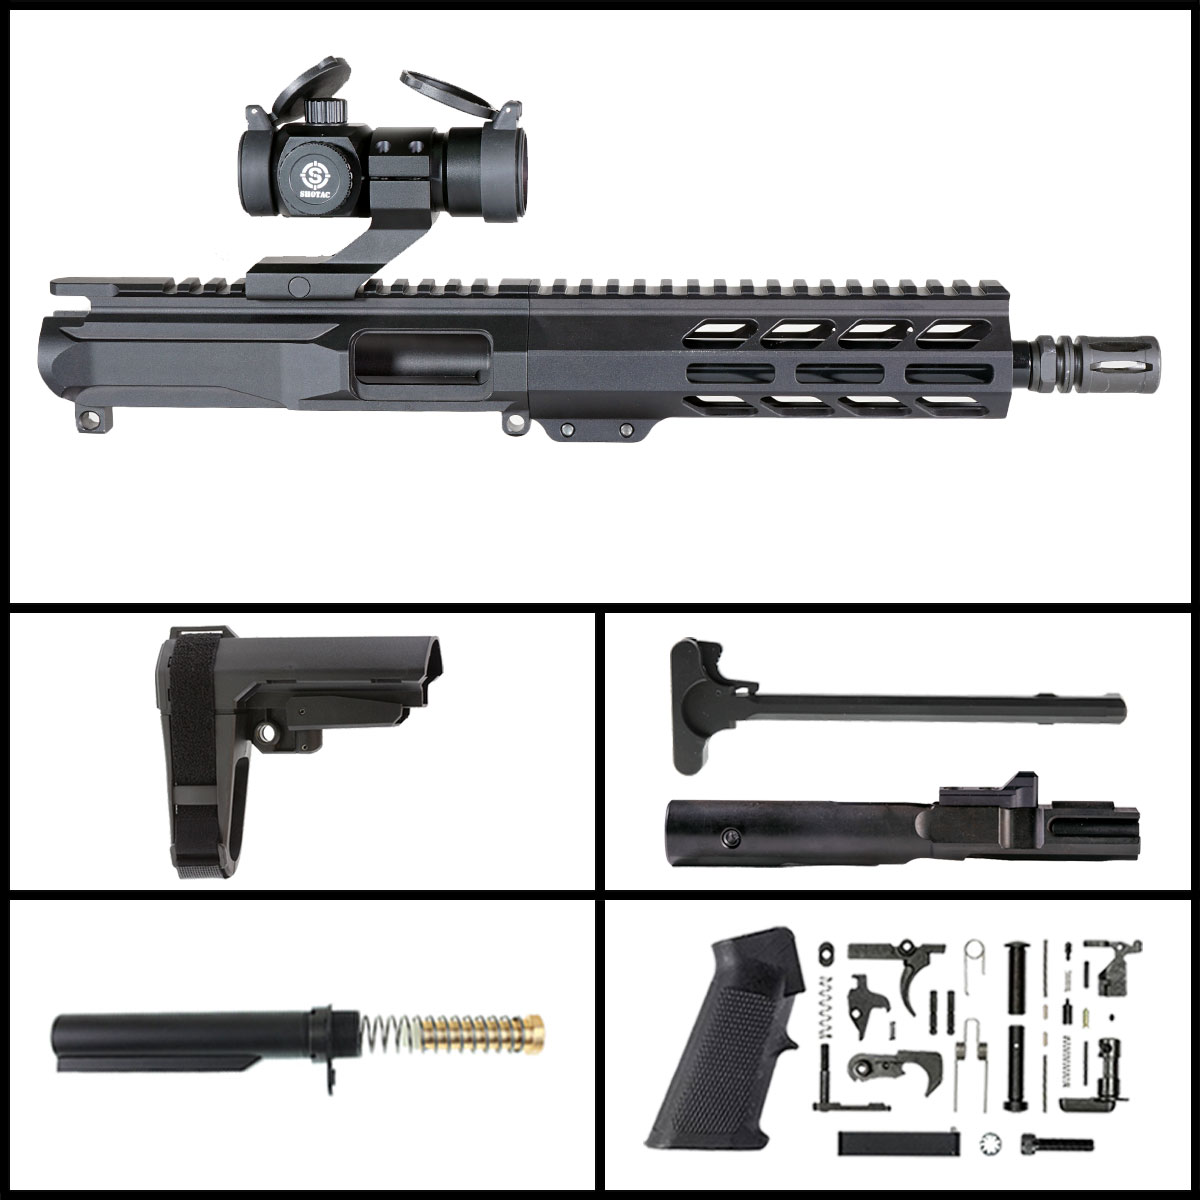 DDS 'Eternal Night Gen 2 w/ Shotac Cantilever' 8.5-inch AR-15 9mm Nitride Pistol Full Build Kit